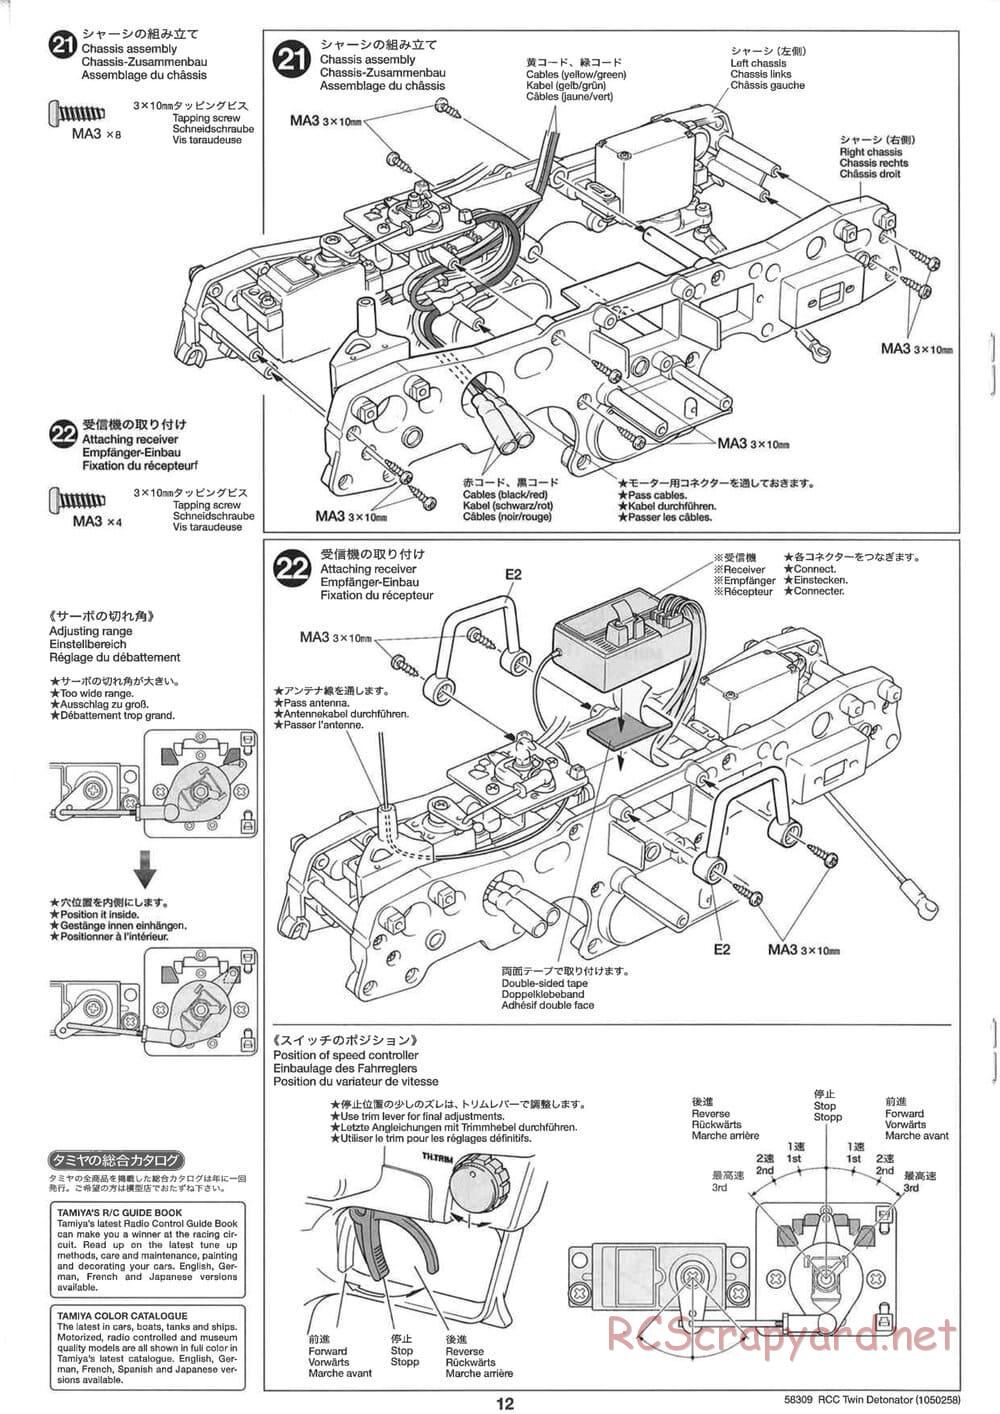 Tamiya - Twin Detonator - WR-01 Chassis - Manual - Page 12